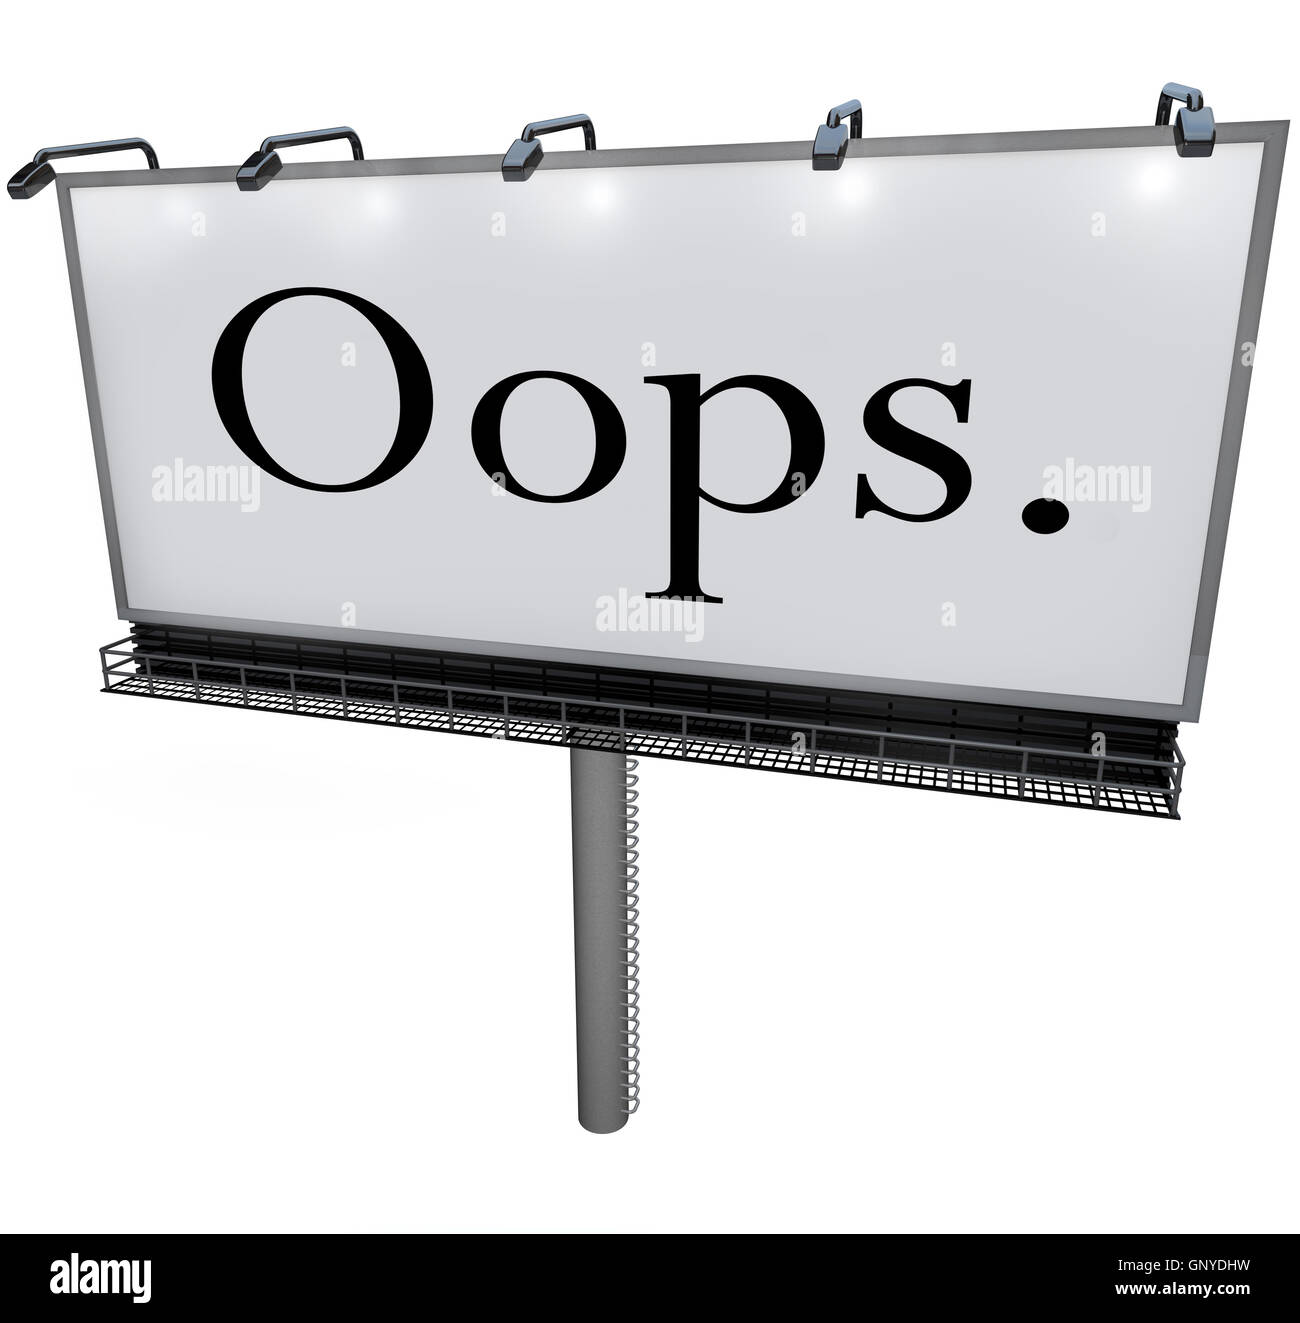 Oops Word on Billboard Public Mistake Embarrassment Stock Photo